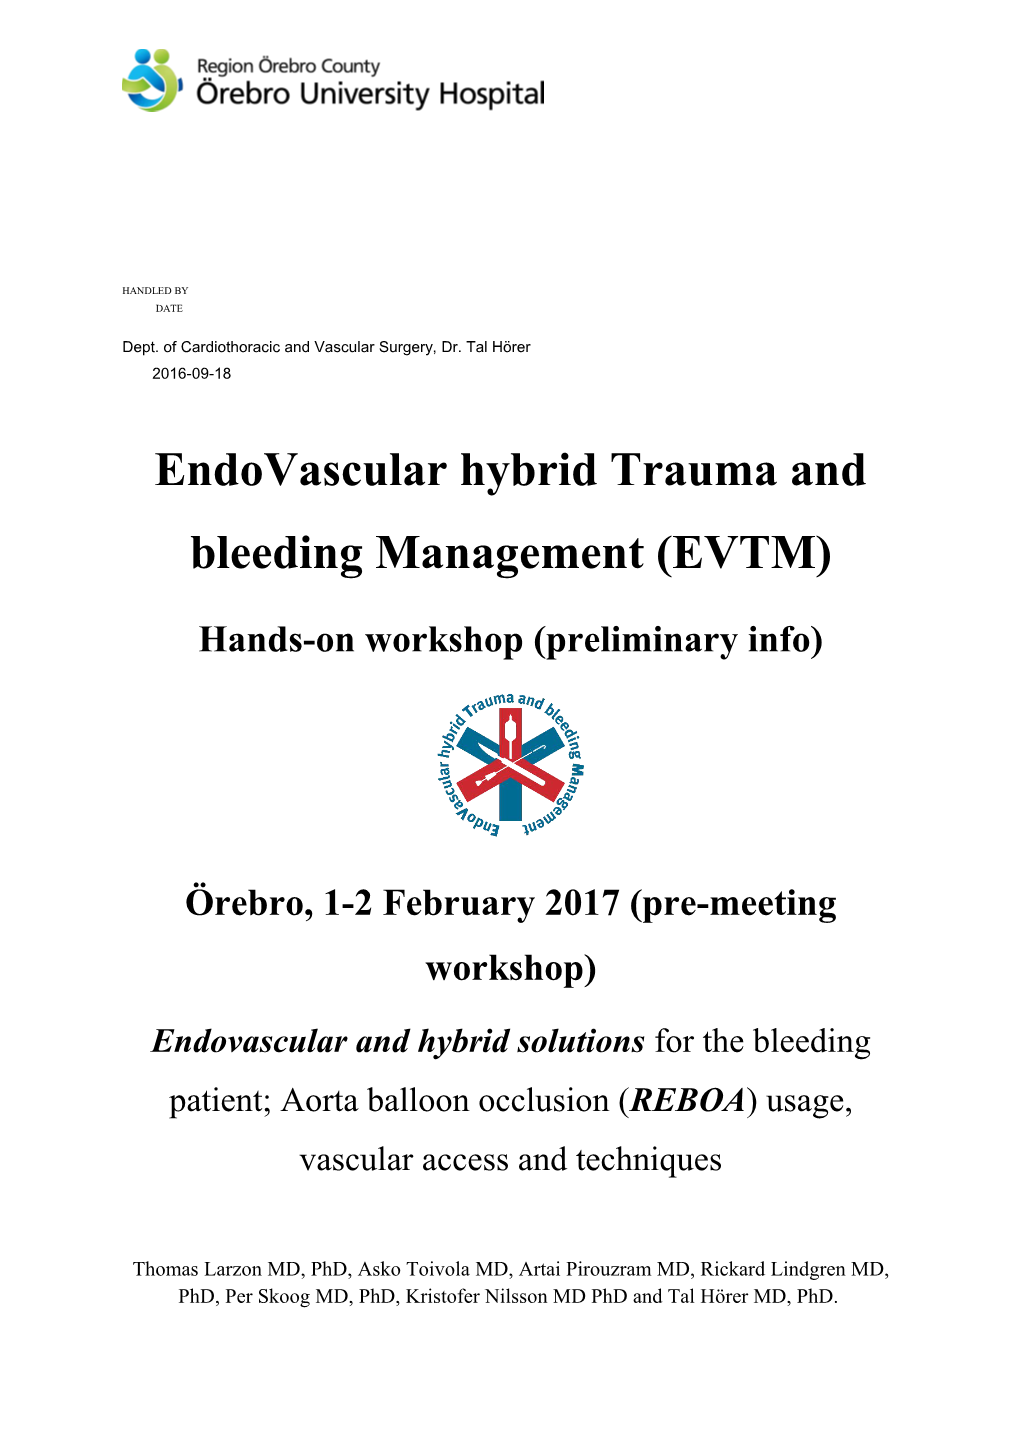 Endovascularhybridtrauma and Bleeding Management (EVTM)